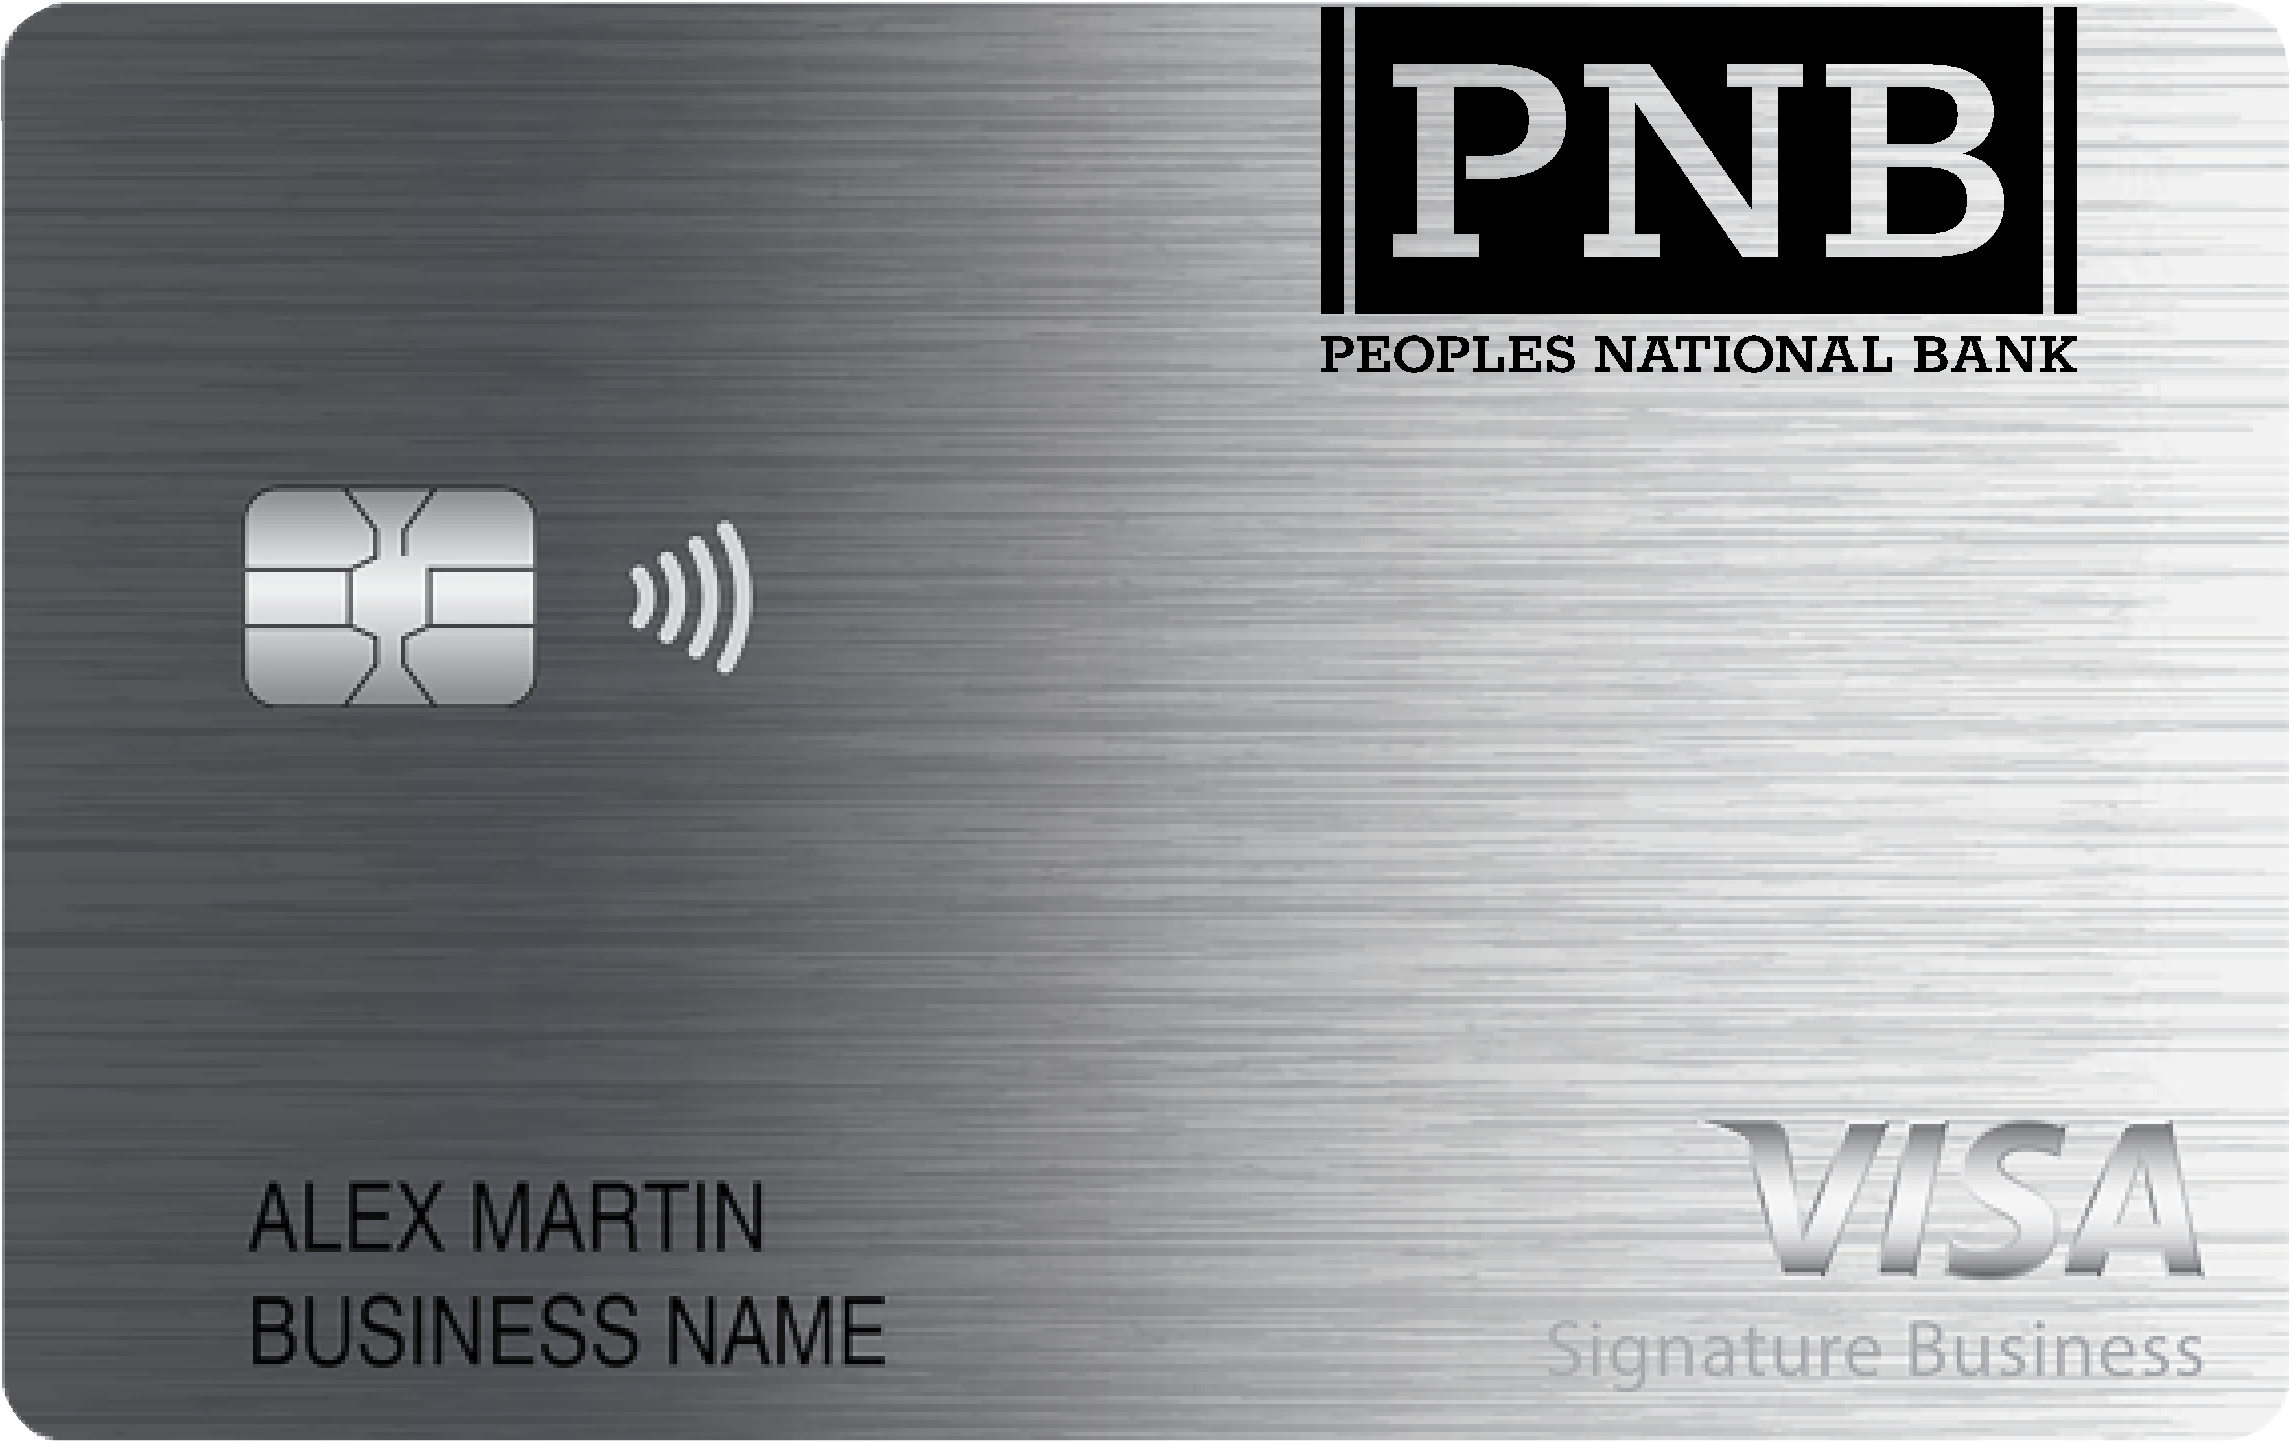 Peoples National Bank Smart Business Rewards Card